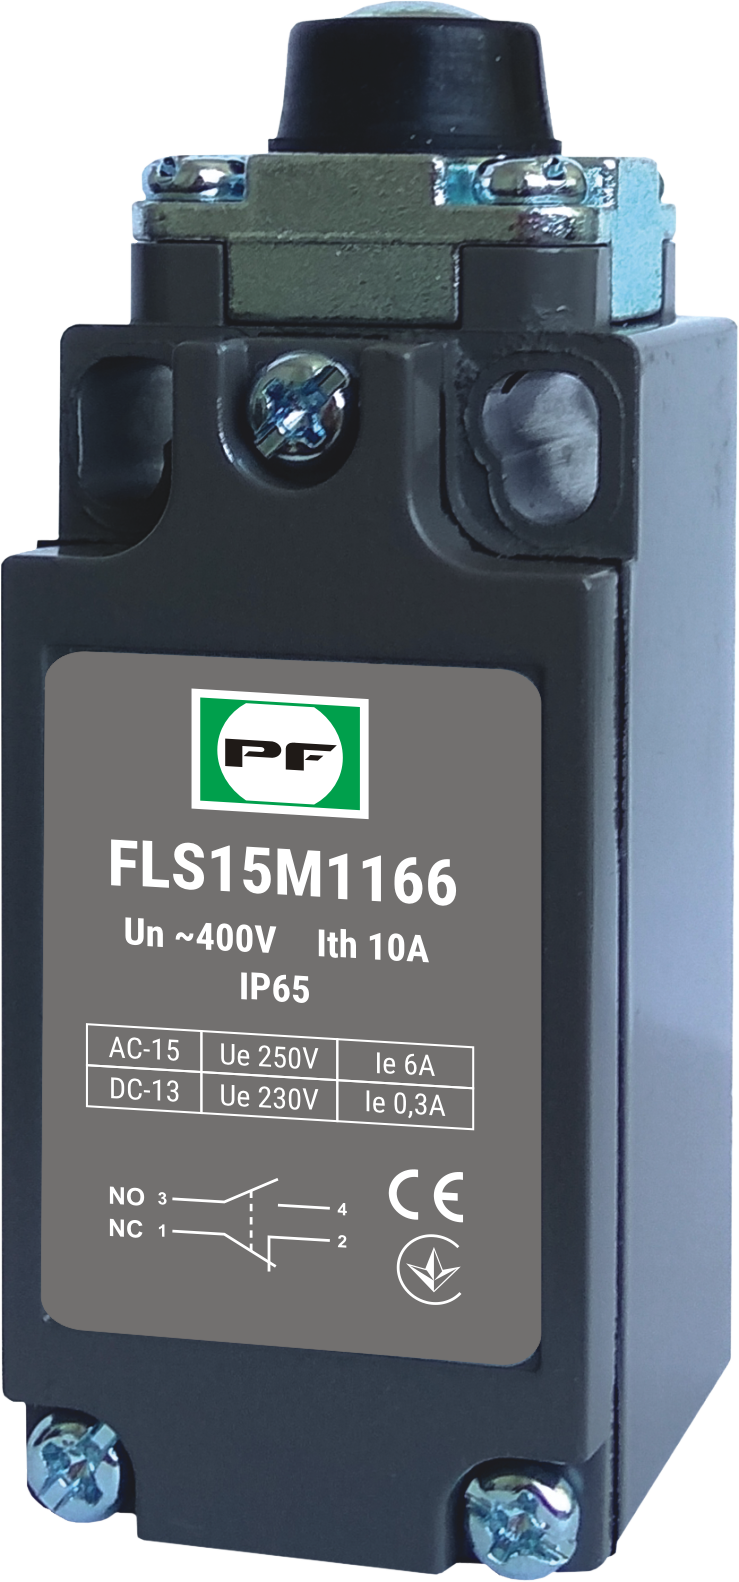 Limit switch FLS15M1166